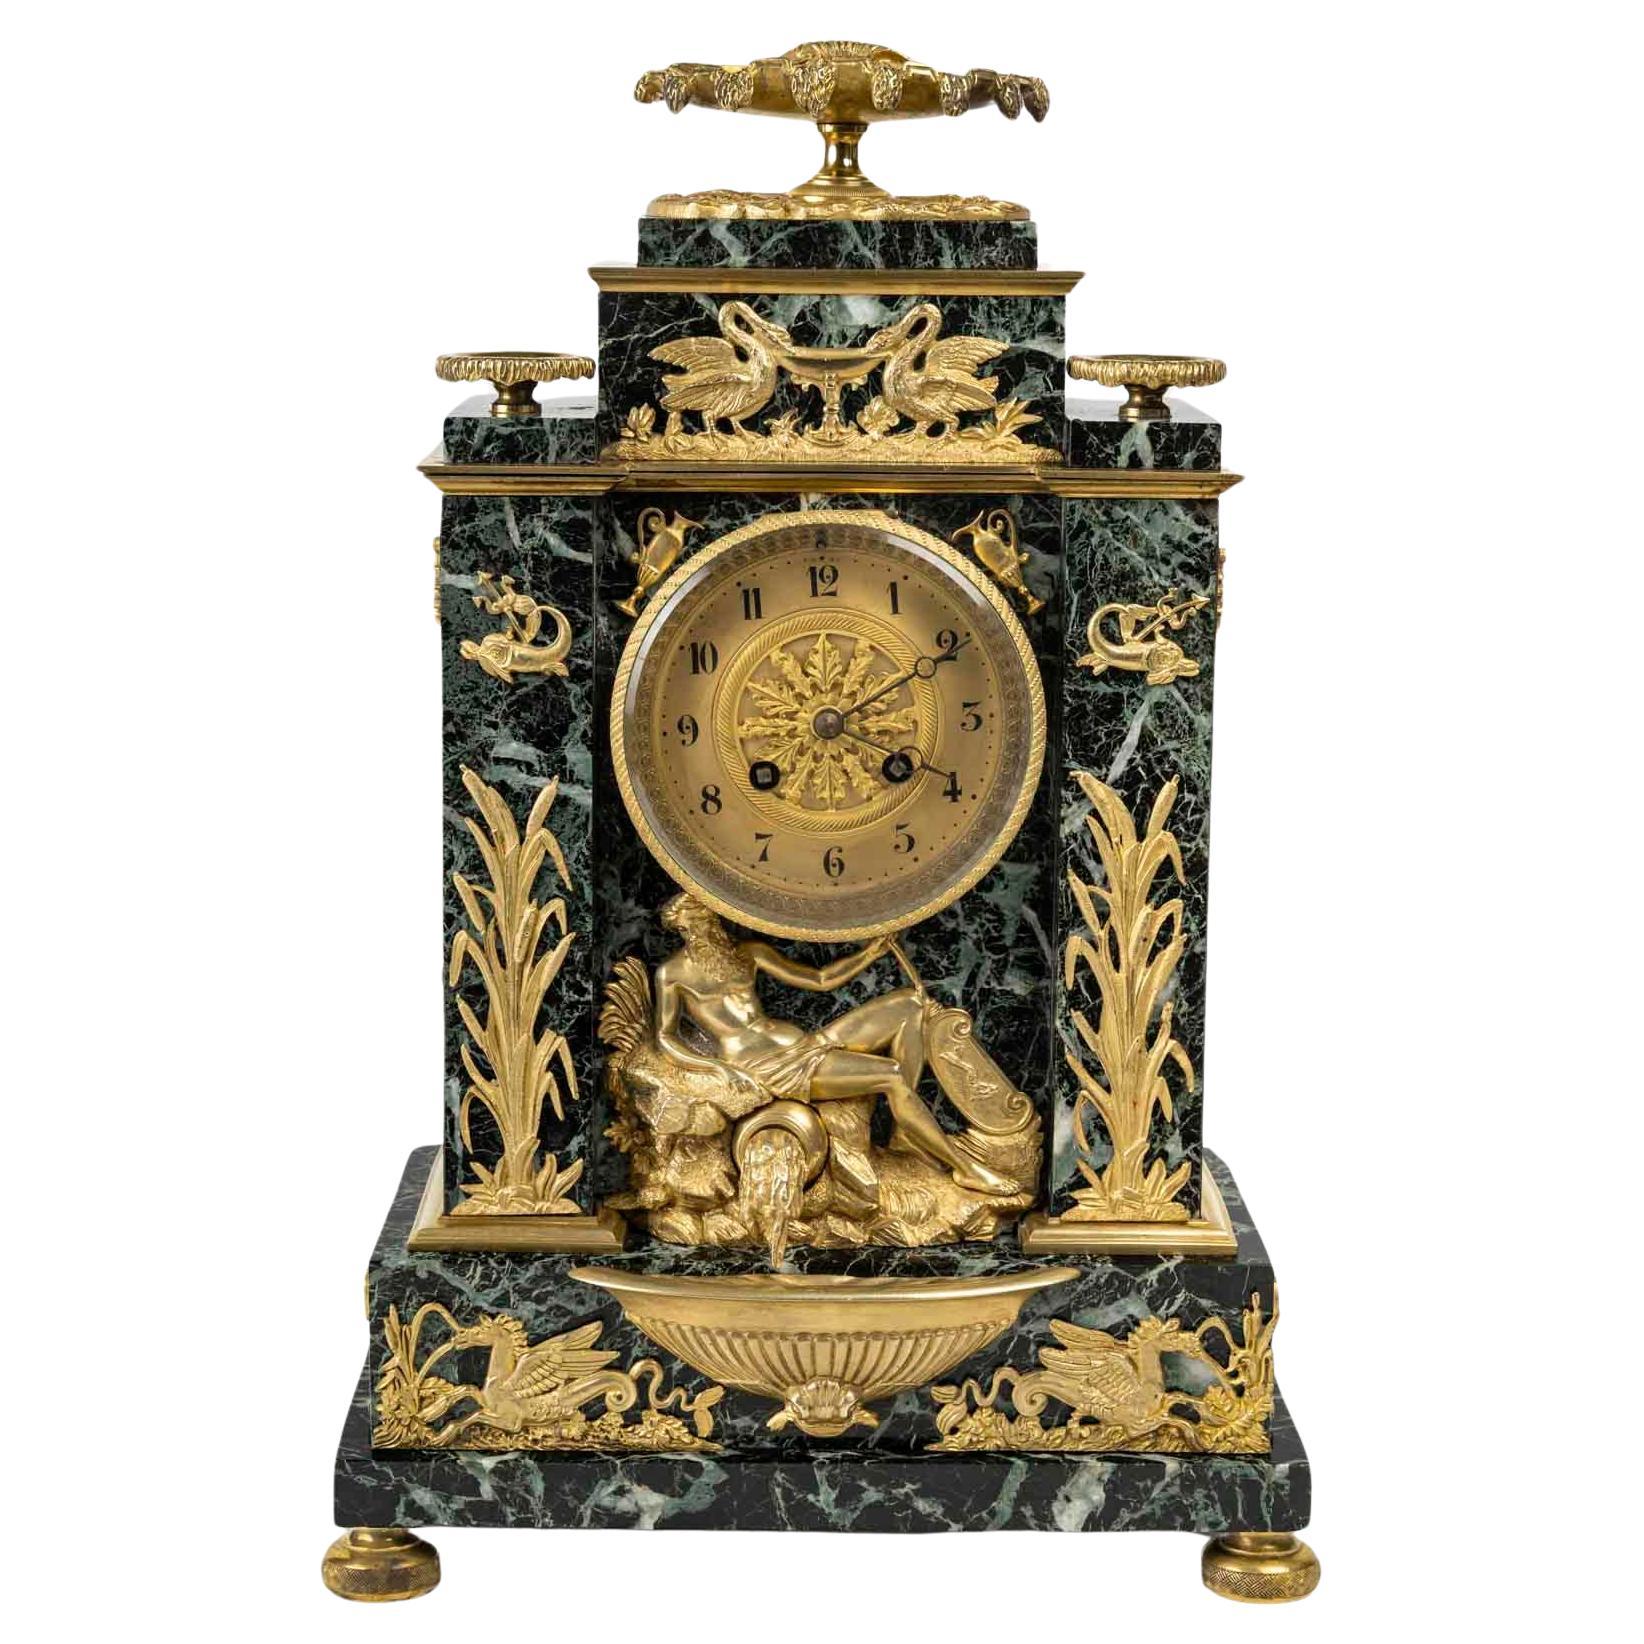 Marble and Gilt Bronze Clock with Mythological Decor, Napoleon III Period.